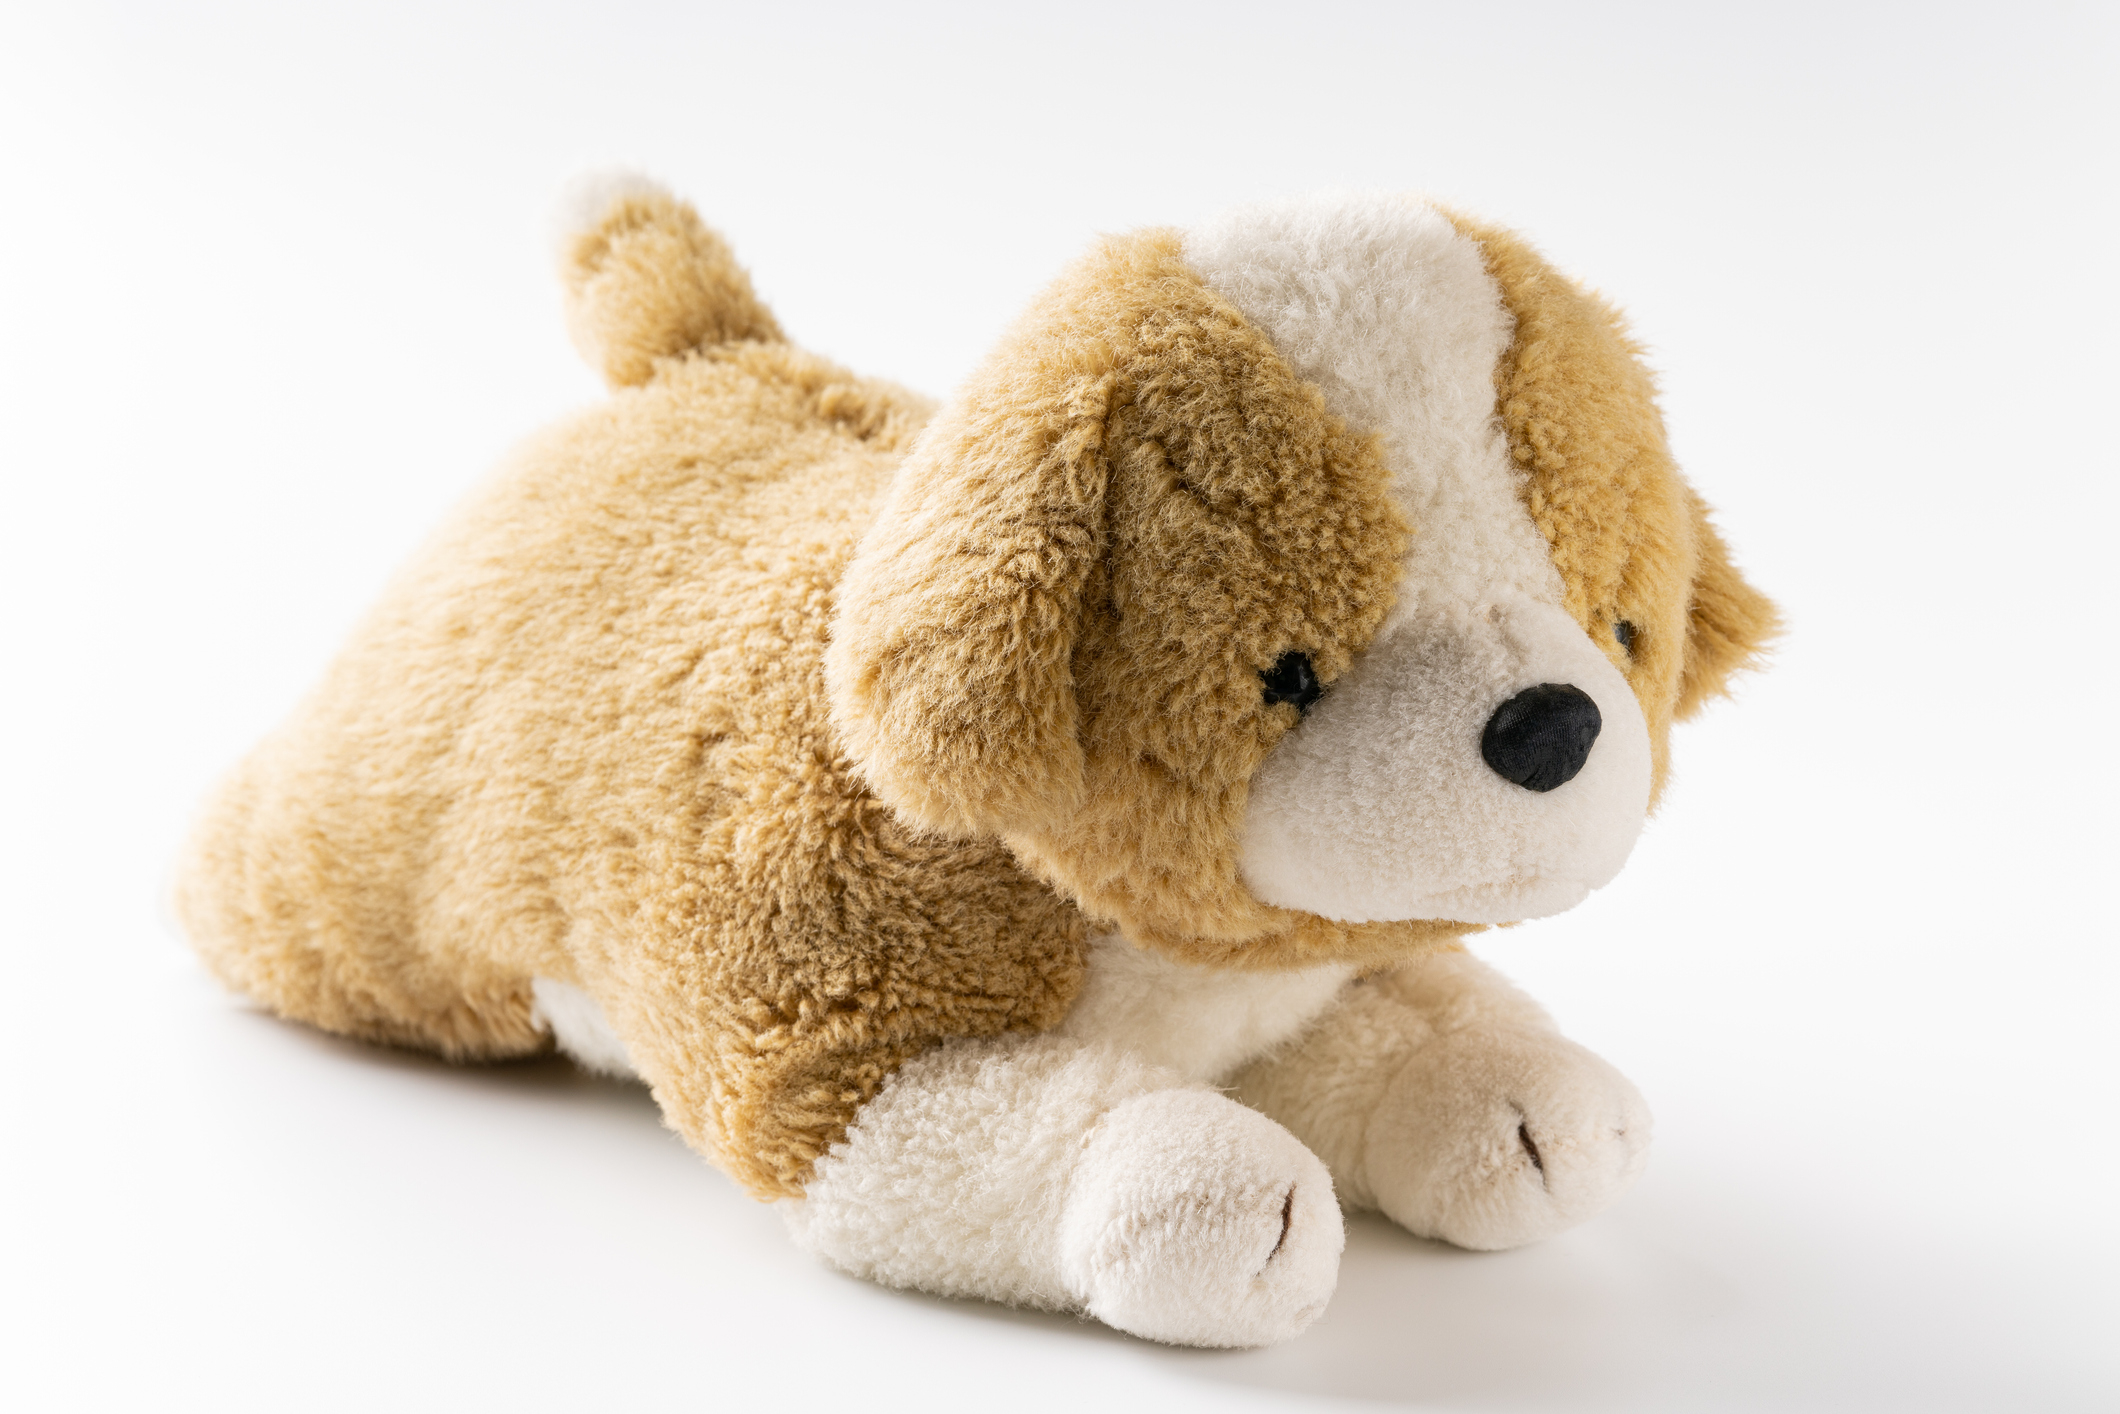 a stuffed puppy toy